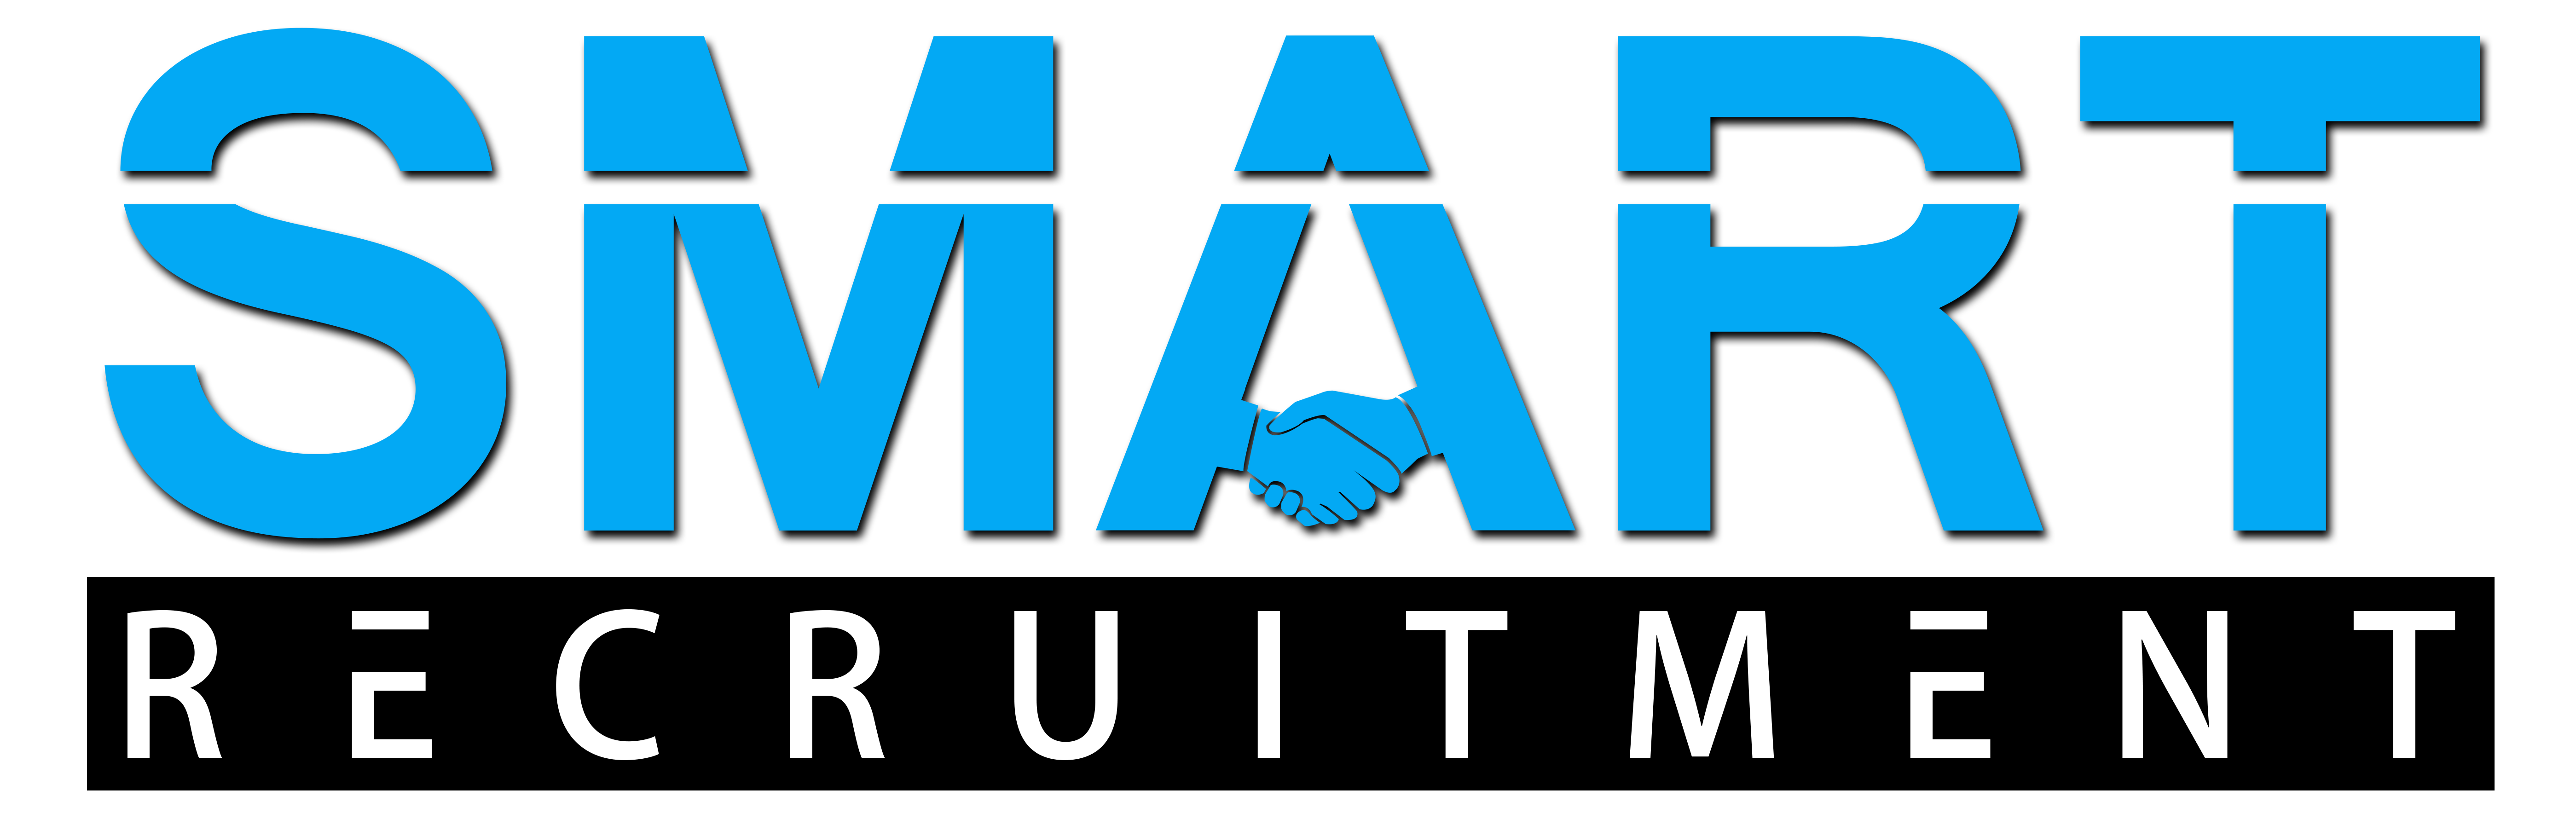 Smart recruitment solutions jobs dorchester